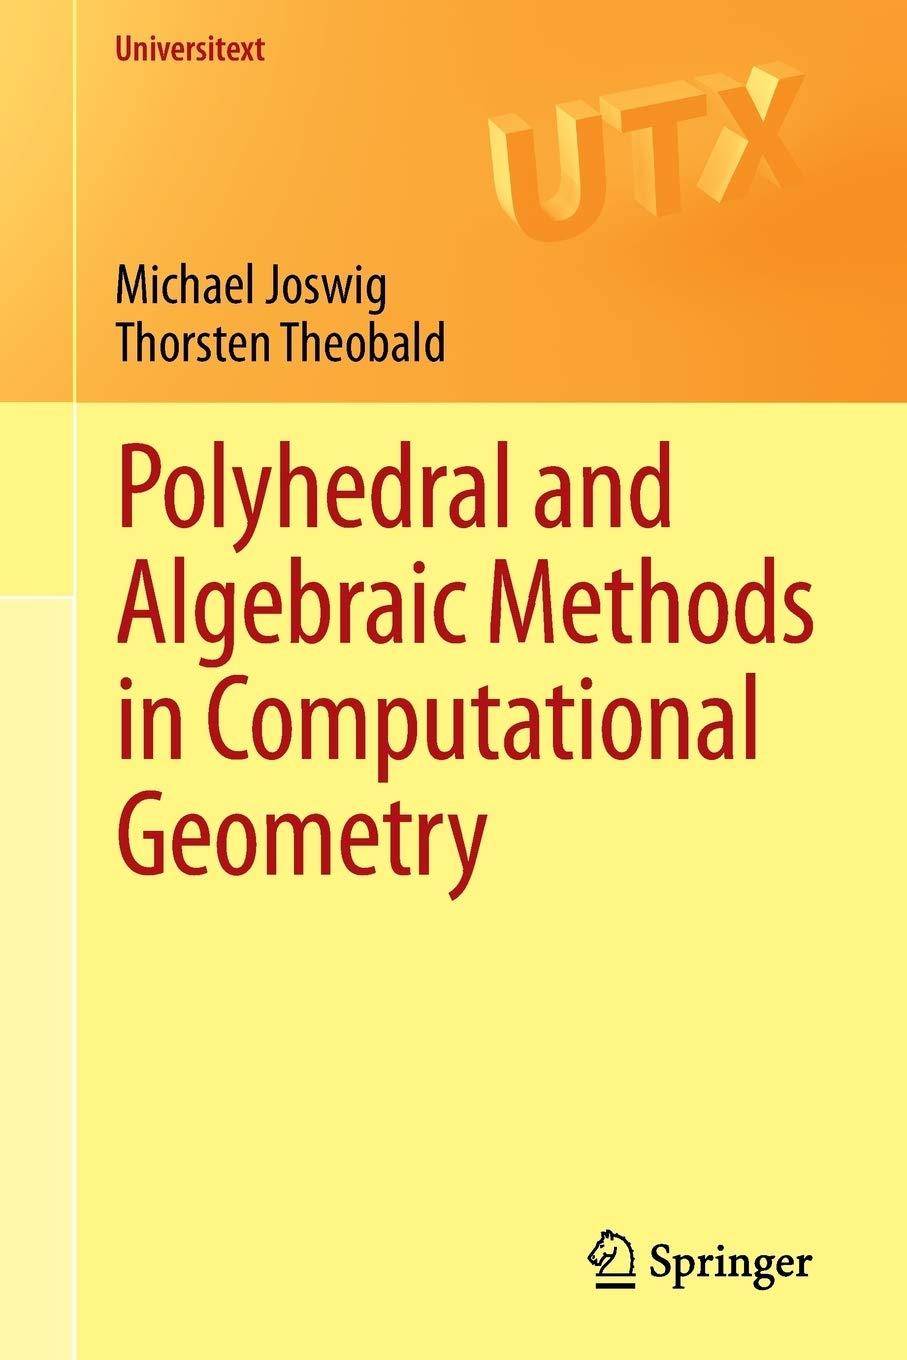 polyhedral and algebraic methods in computational geometry universitext 1st edition michael joswig, thorsten